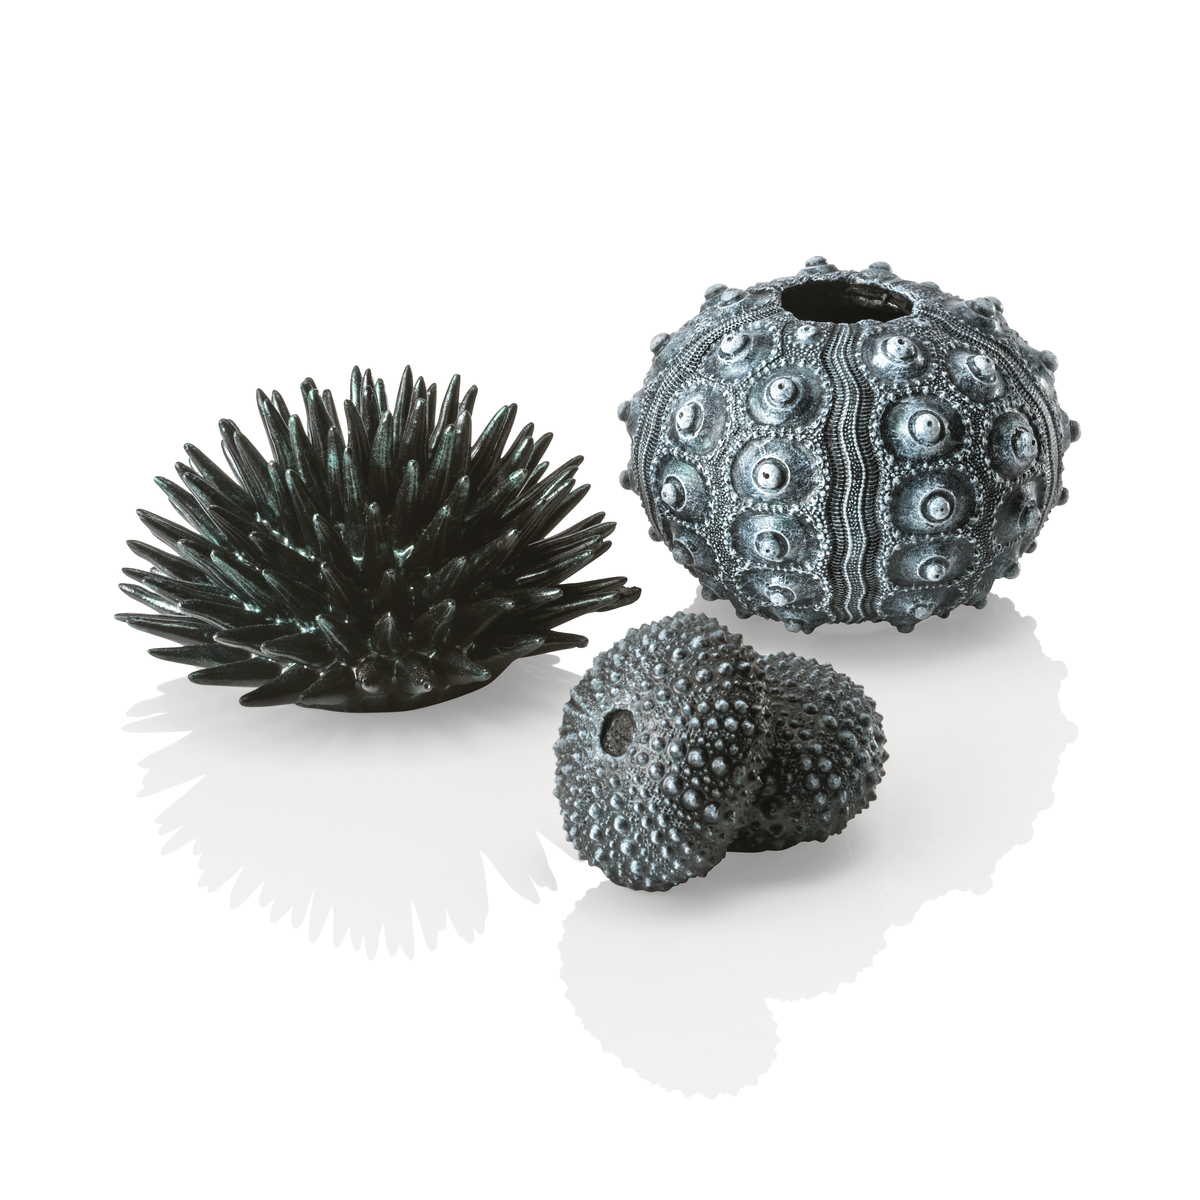 Oase BiOrb Sea urchins set of 3 - Black